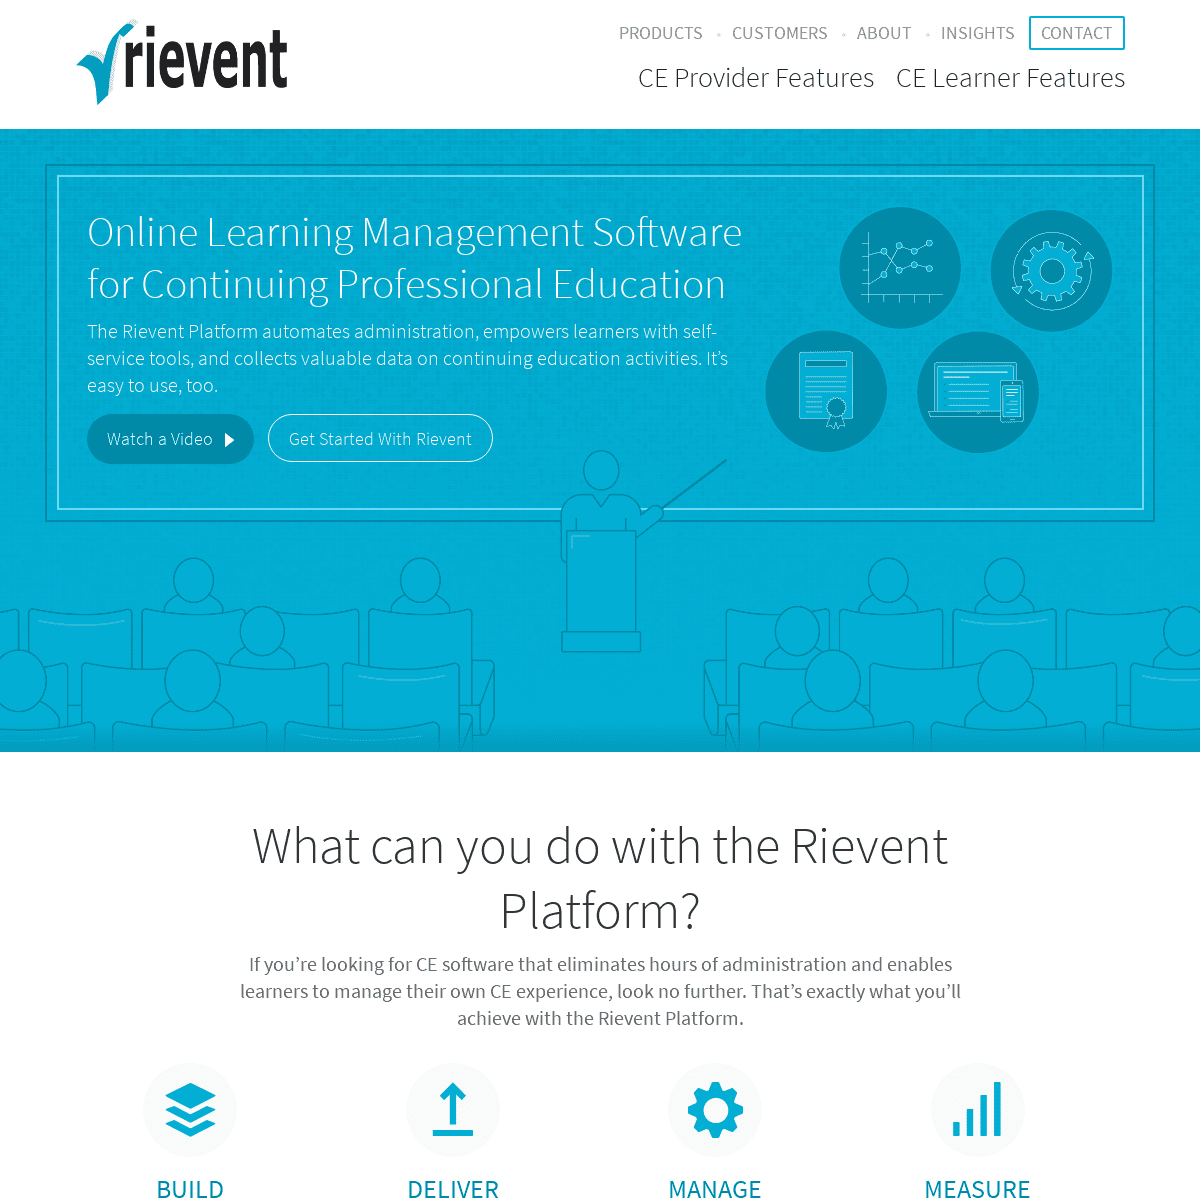 A complete backup of rievent.com